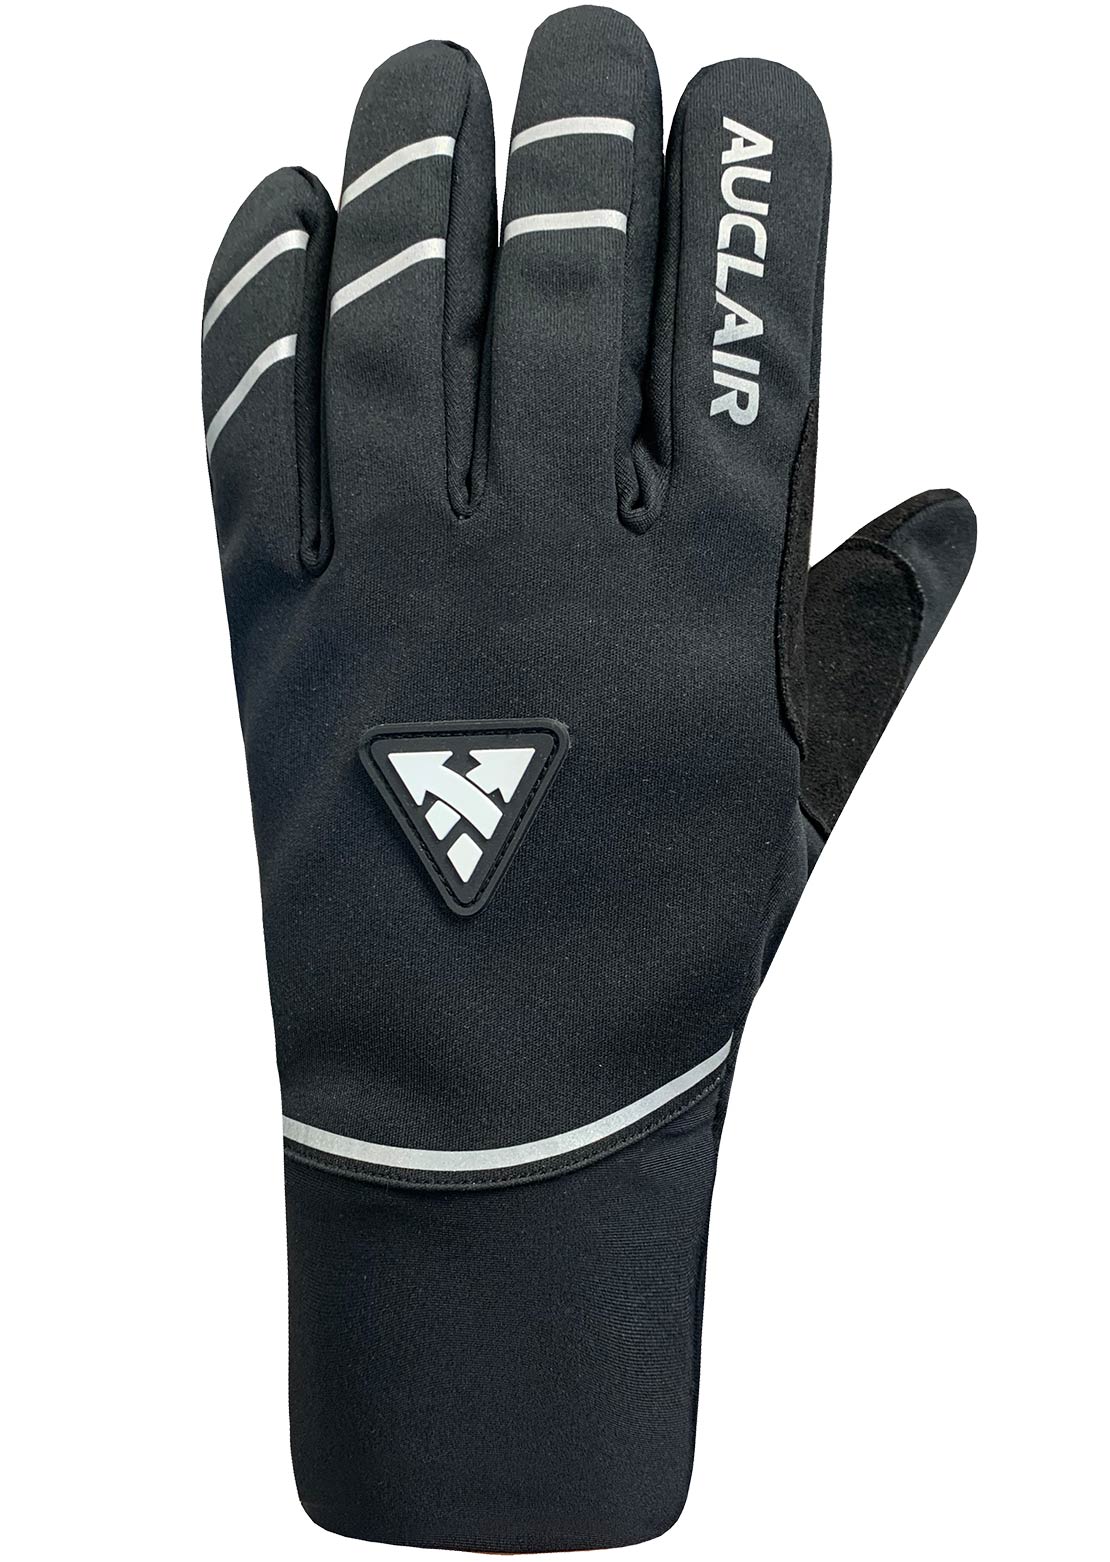 Auclair Nordik Windstopper Gloves Black/Black/Silver